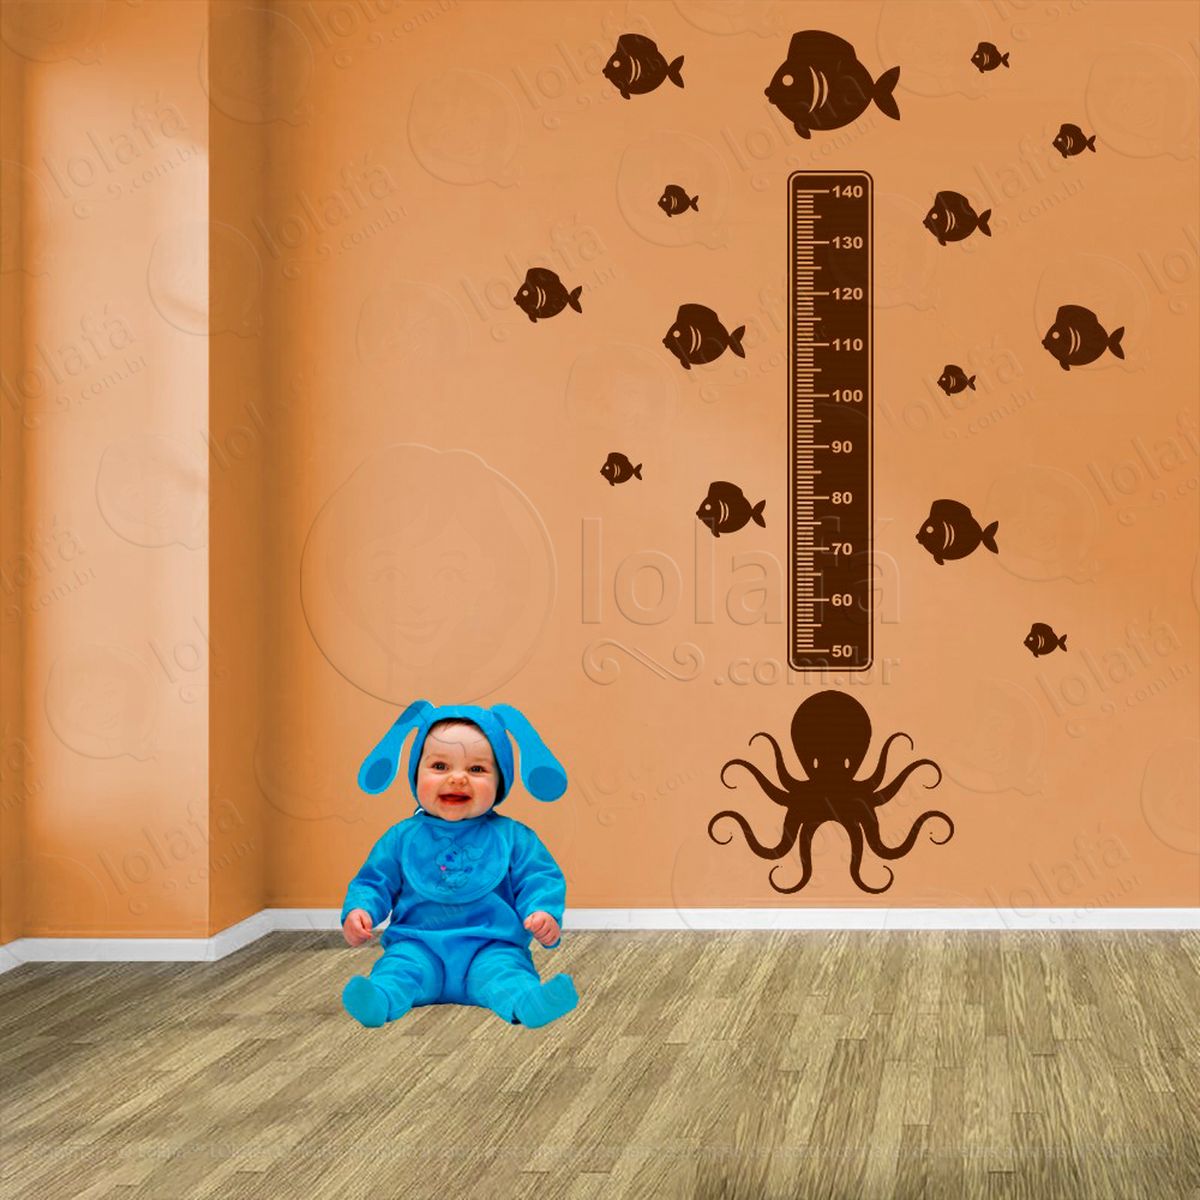 polvo e peixes adesivo régua de crescimento infantil, medidor de altura para quarto, porta e parede - mod:140